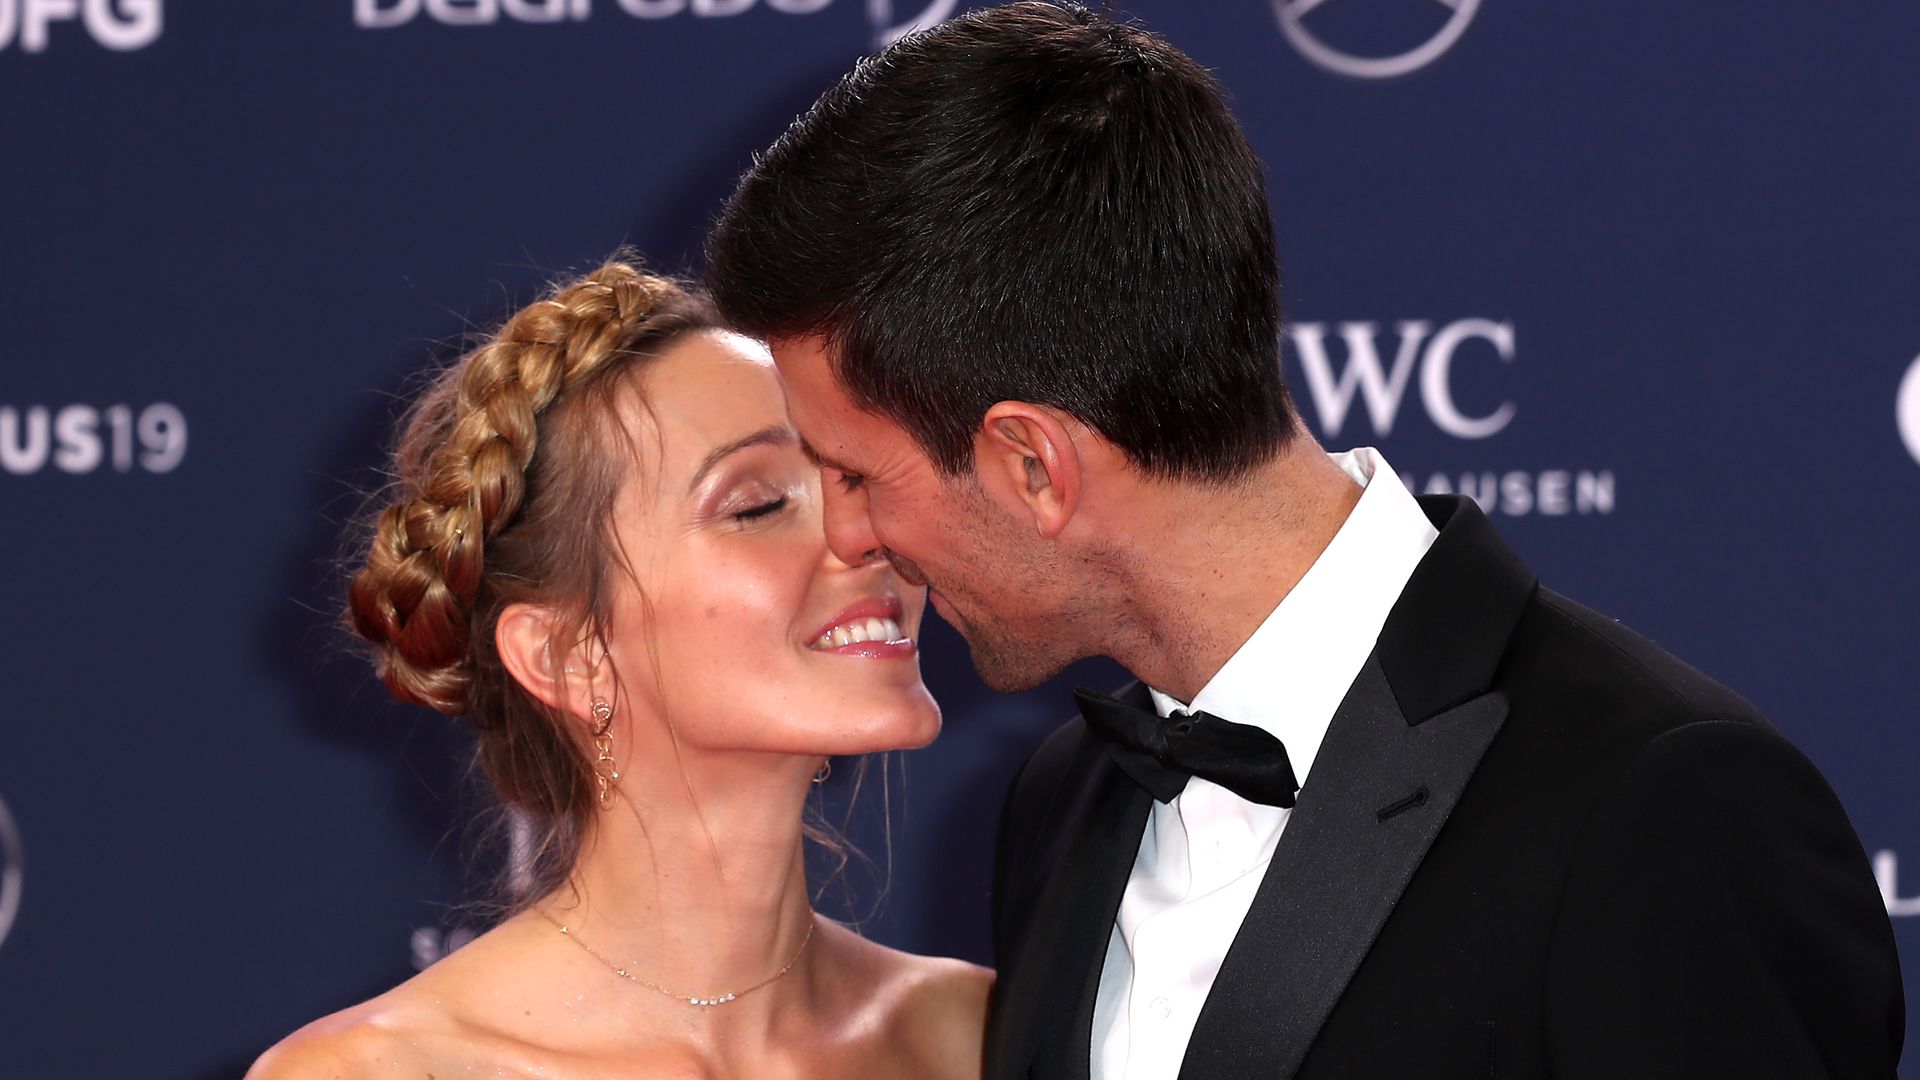 Novak Djokovic's pregnant bride Jelena's tearful moment at fairytale wedding